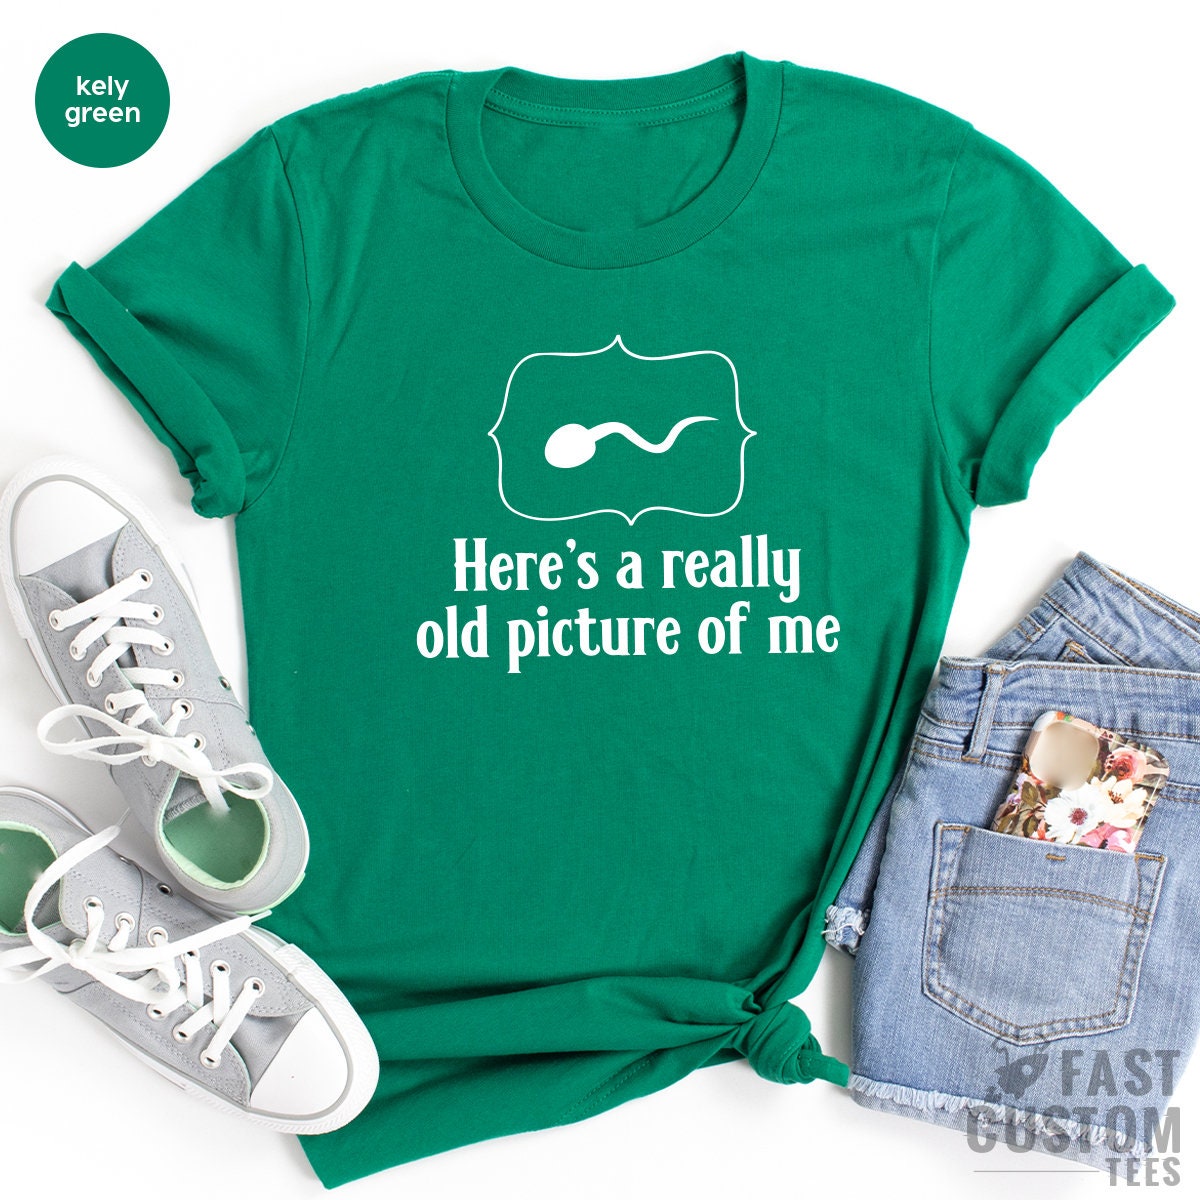 Funny T Shirt, Funny Sperm Shirt, Adult Humor TShirt, Biology Teacher Tee, Biology Student Shirt, Funny Birth Shirt, Offensive Comedy Tee - Fastdeliverytees.com